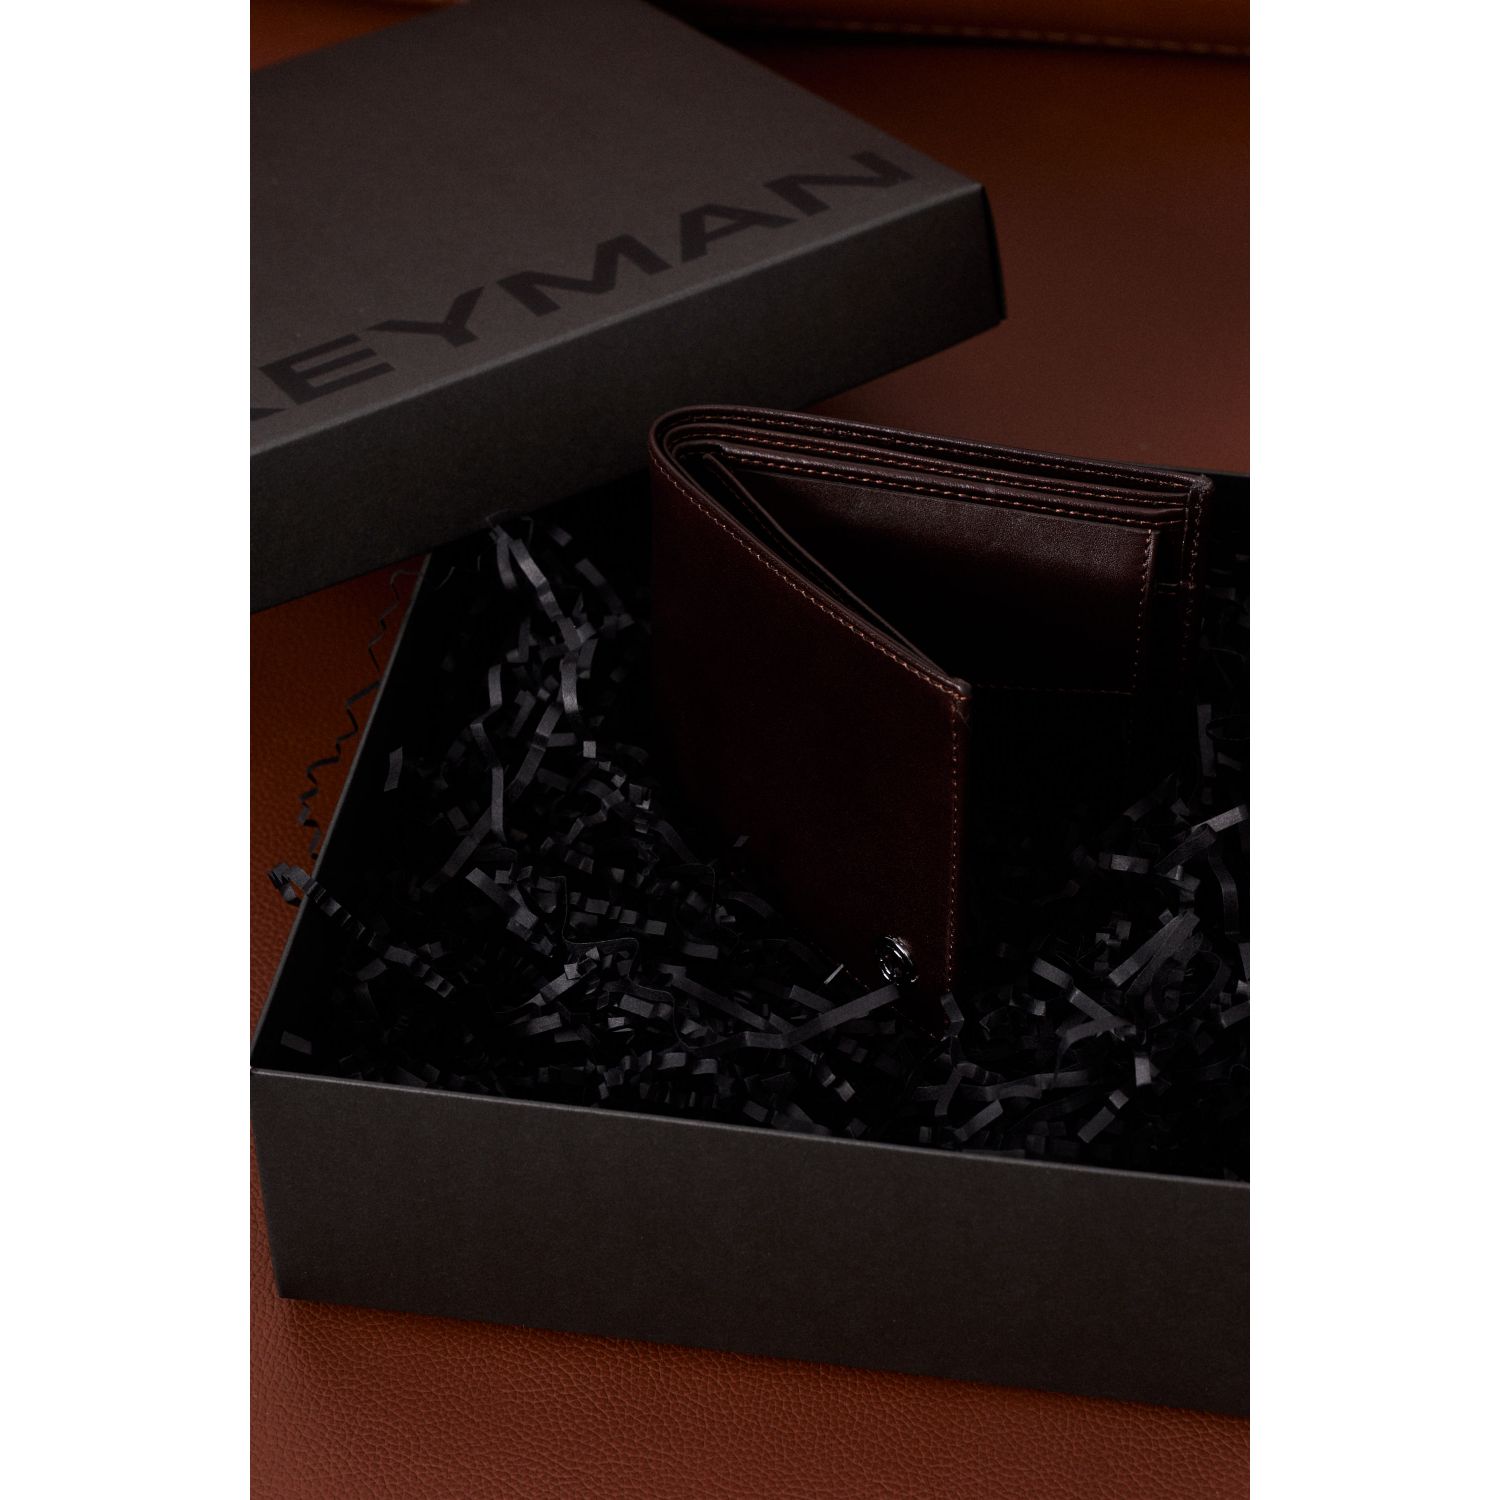 Пример подарочного набора Keyman (фирменная коробочка, кошелек)